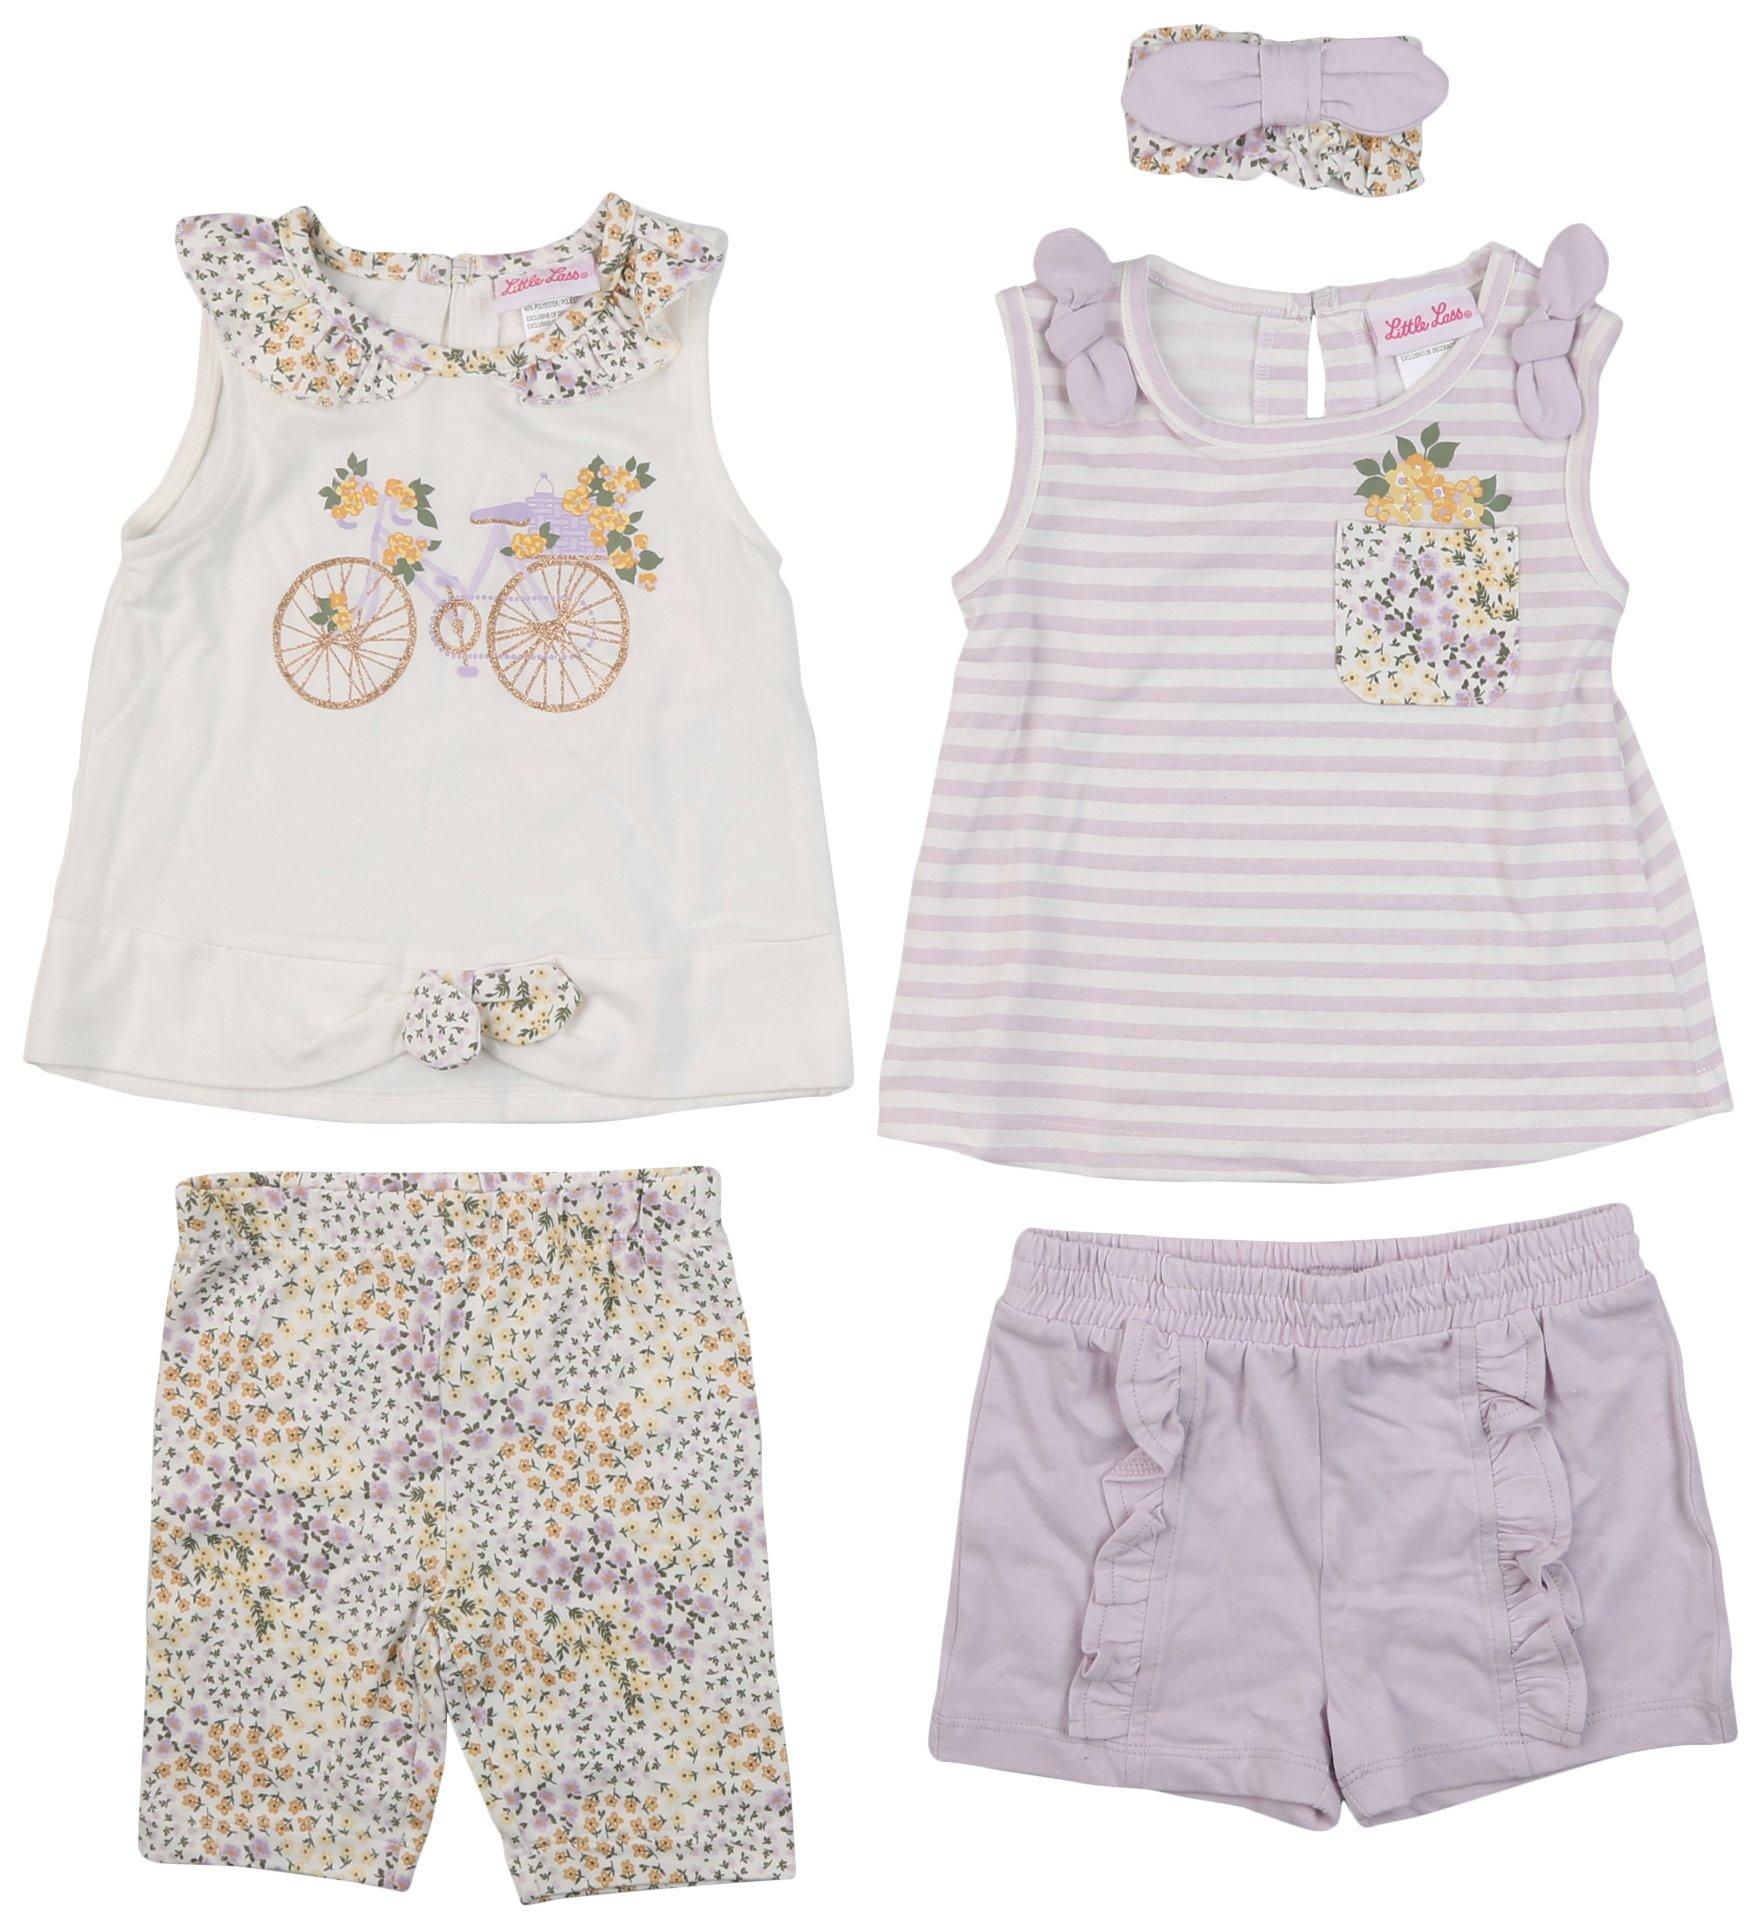 Little Lass Baby Girls 5-Pc. Knit Tops & Knit Shorts Set